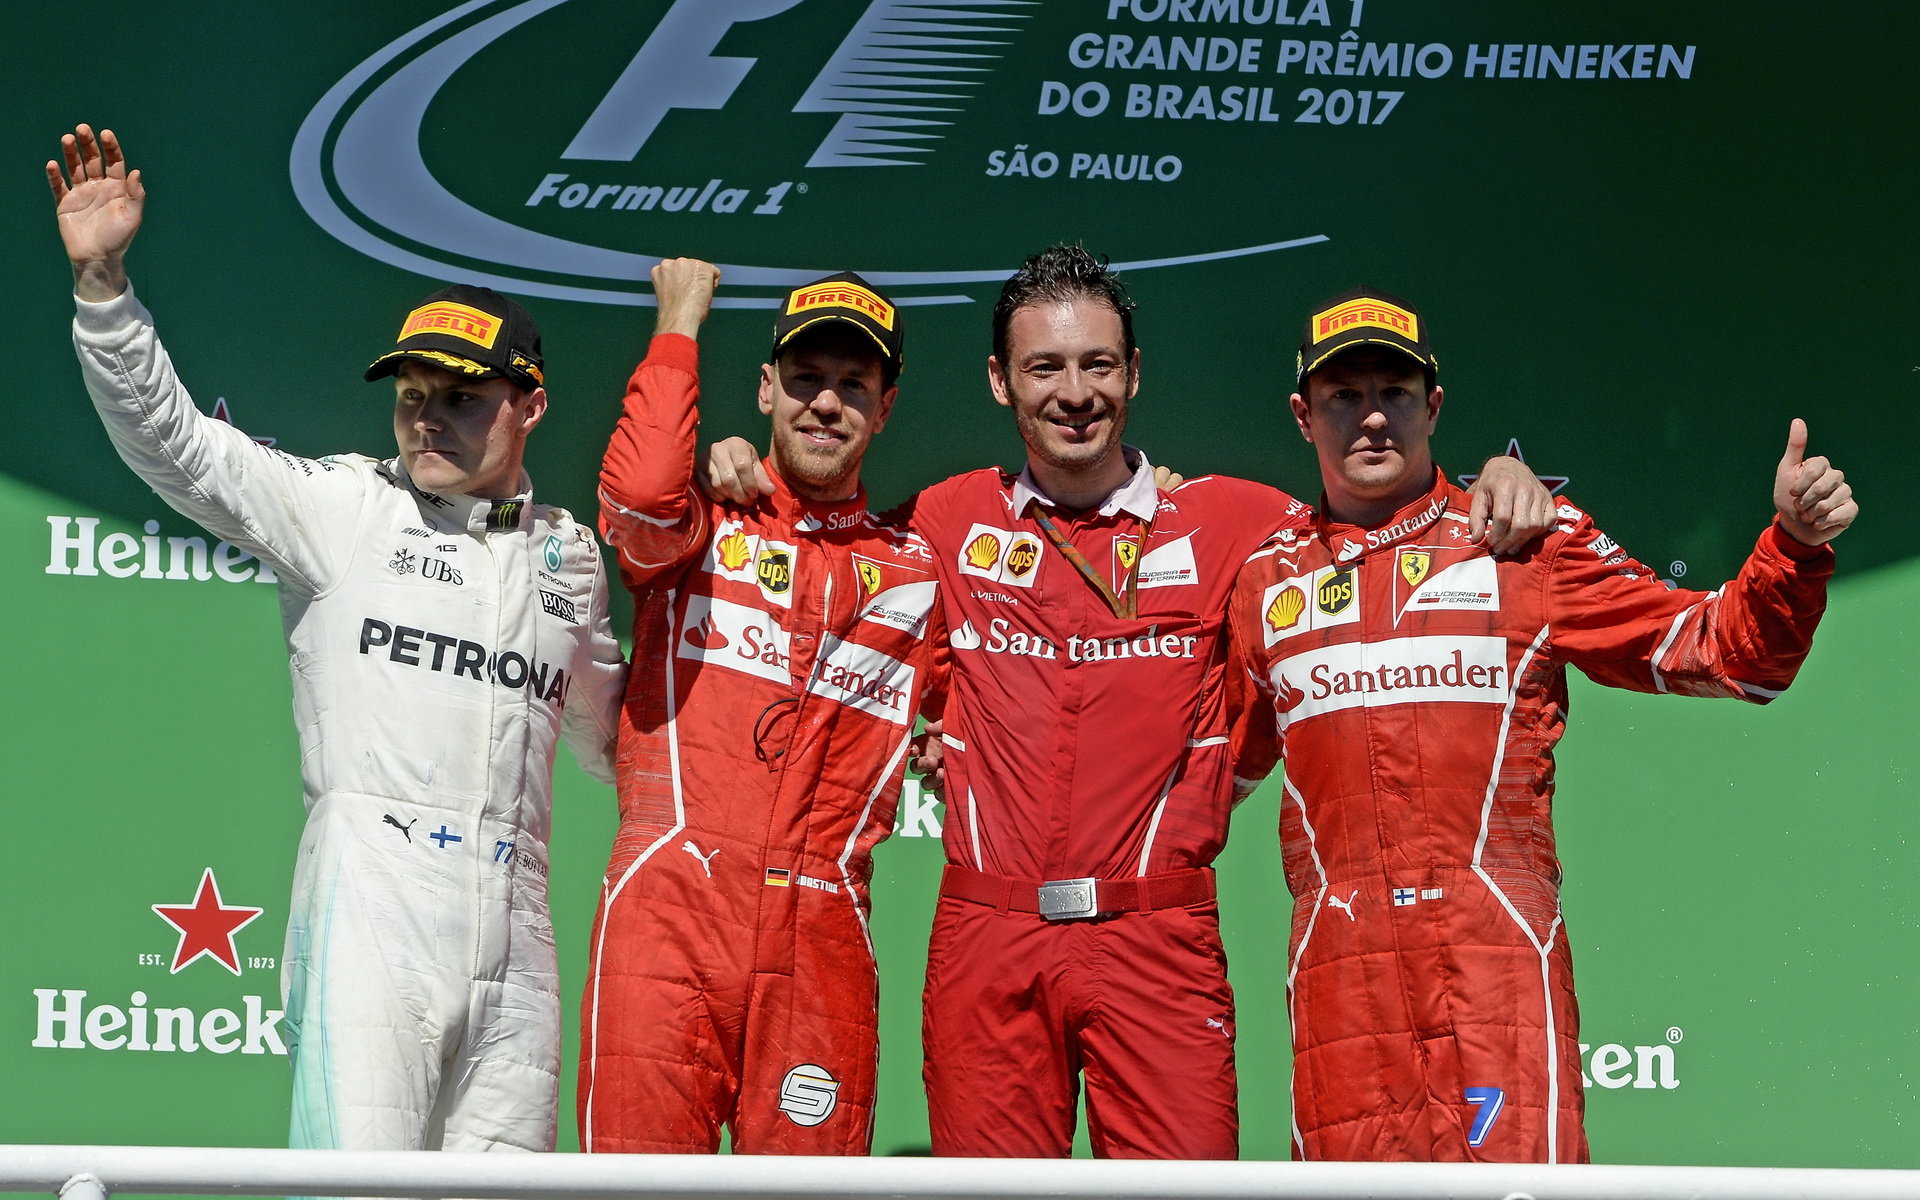 Valtteri Bottas, Sebastian Vettel a Kimi Räikkönen na pódium po závodě v Brazílii